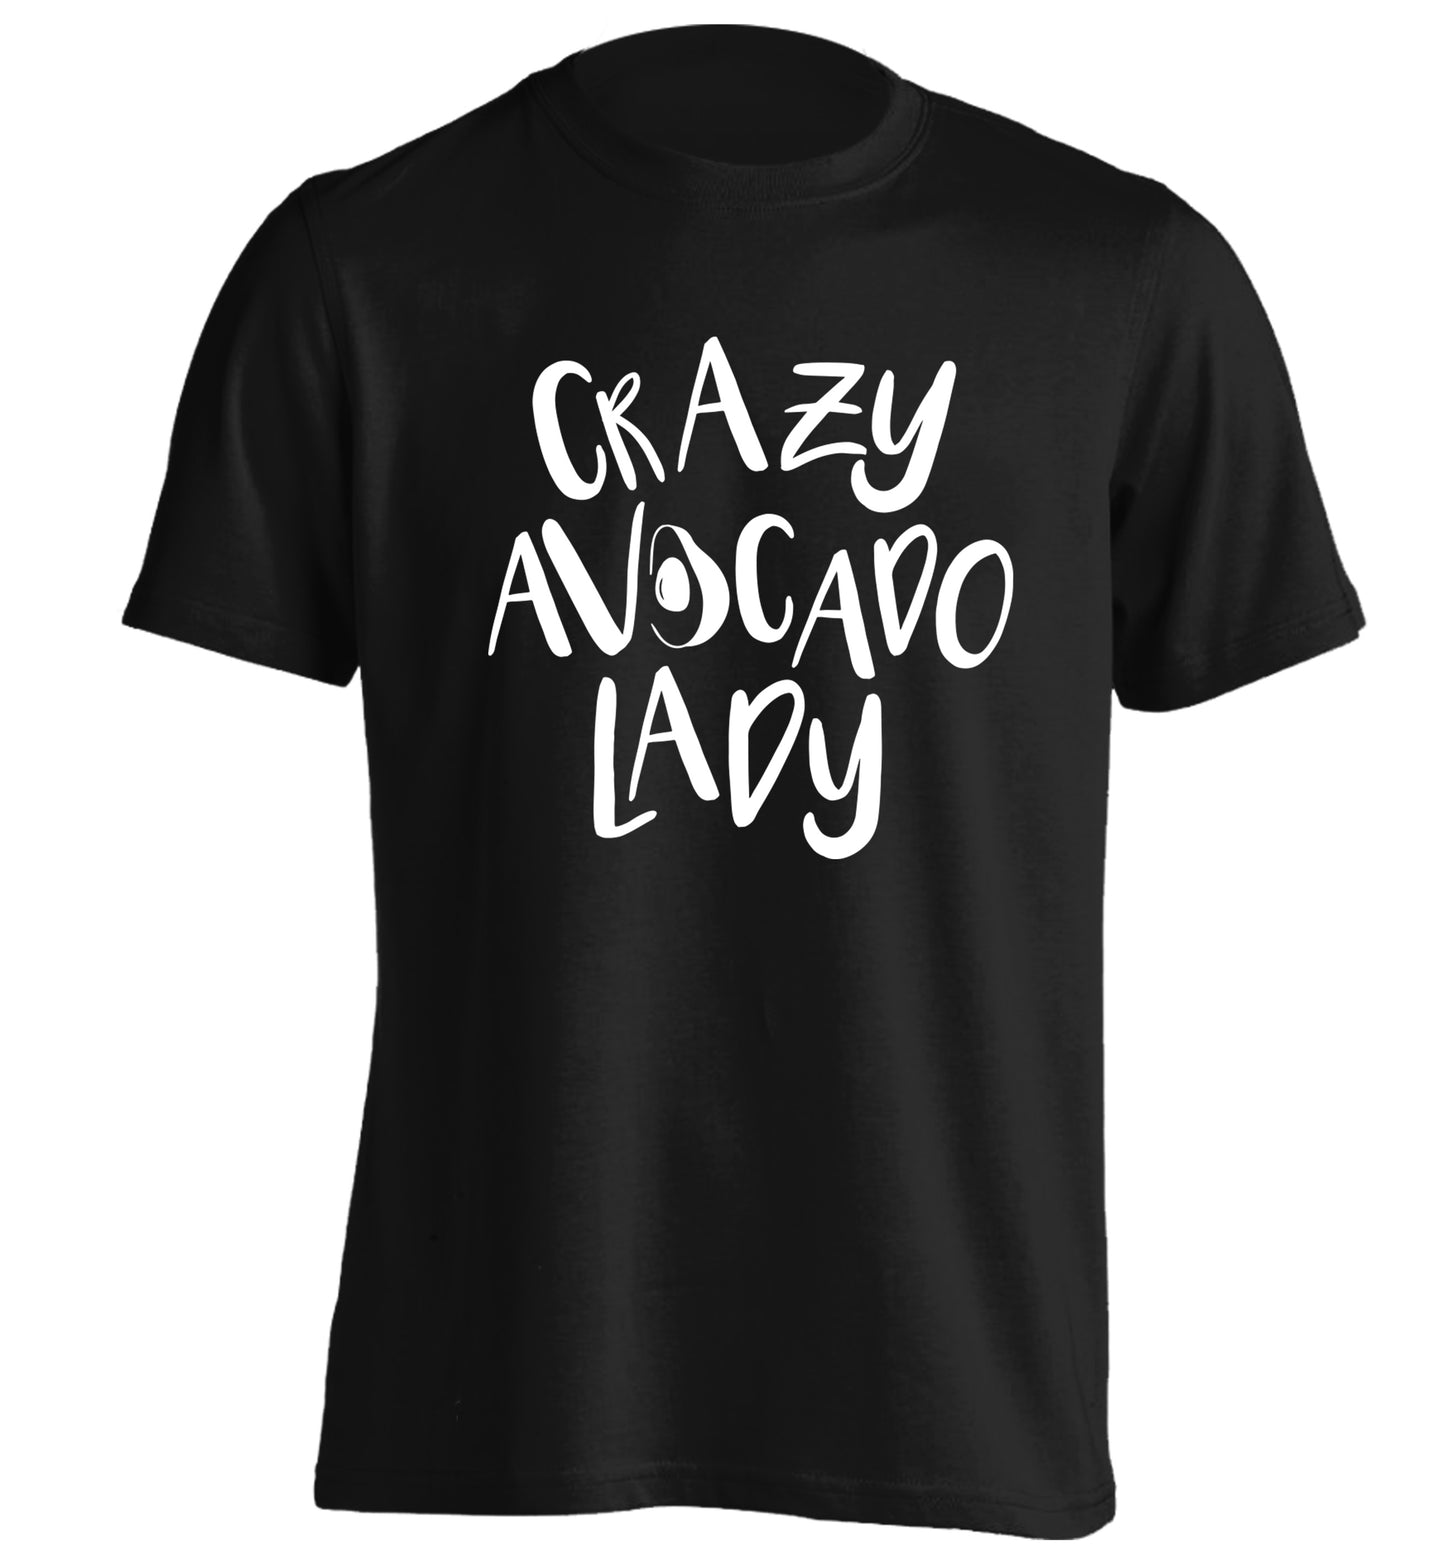 Crazy avocado lady adults unisex black Tshirt 2XL